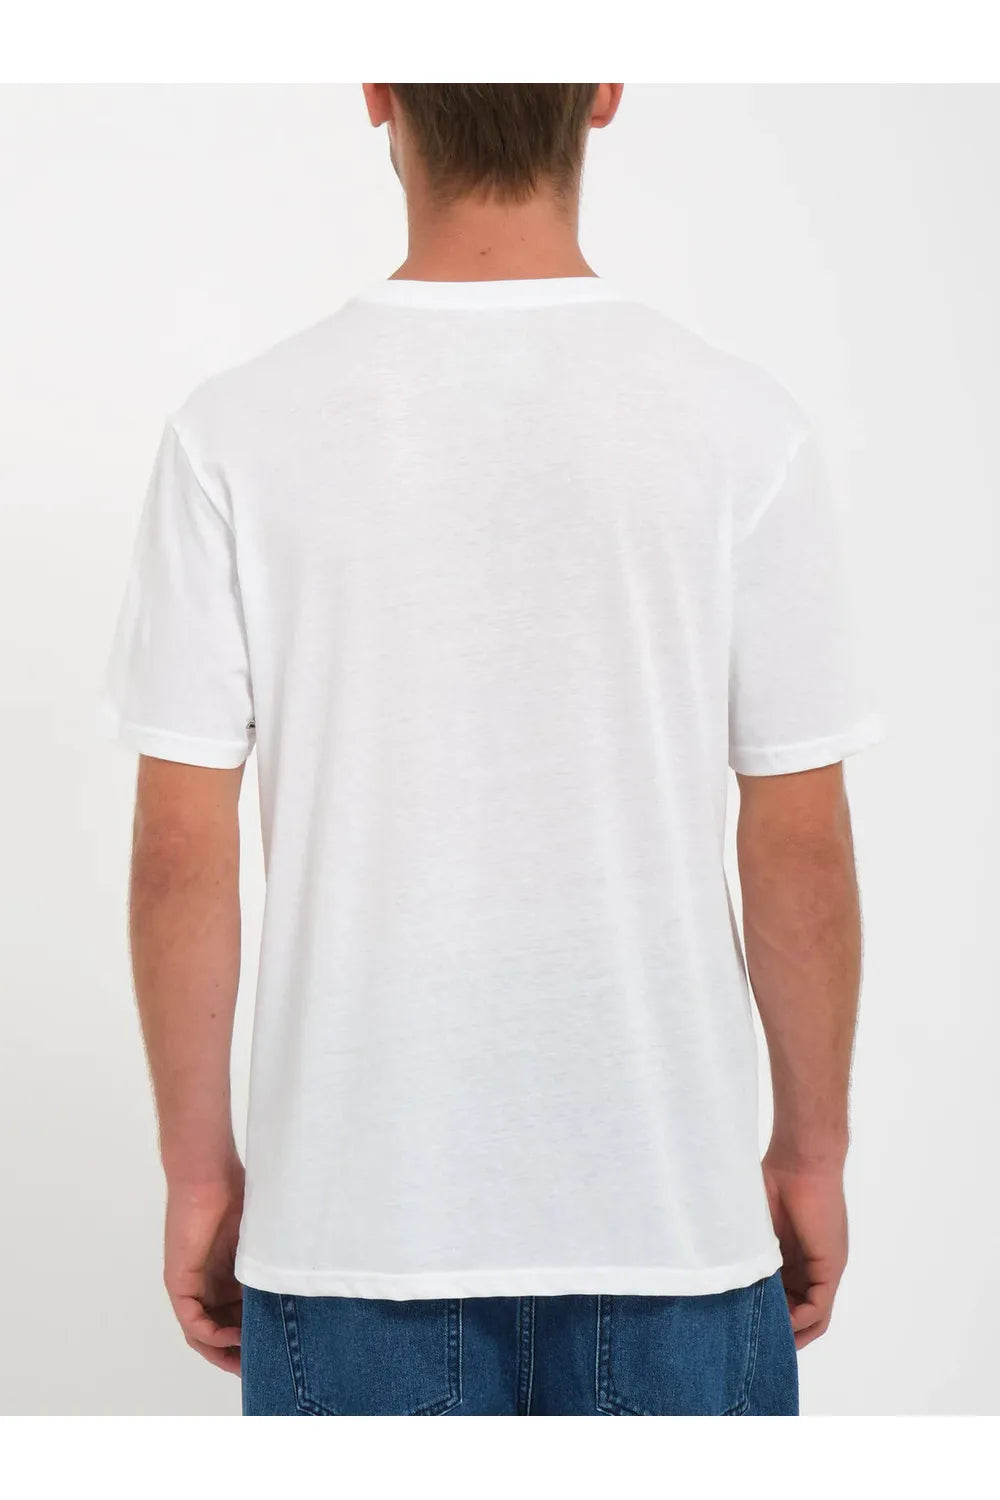 Volcom Westgames Bsc Short Sleeve T-Shirt White